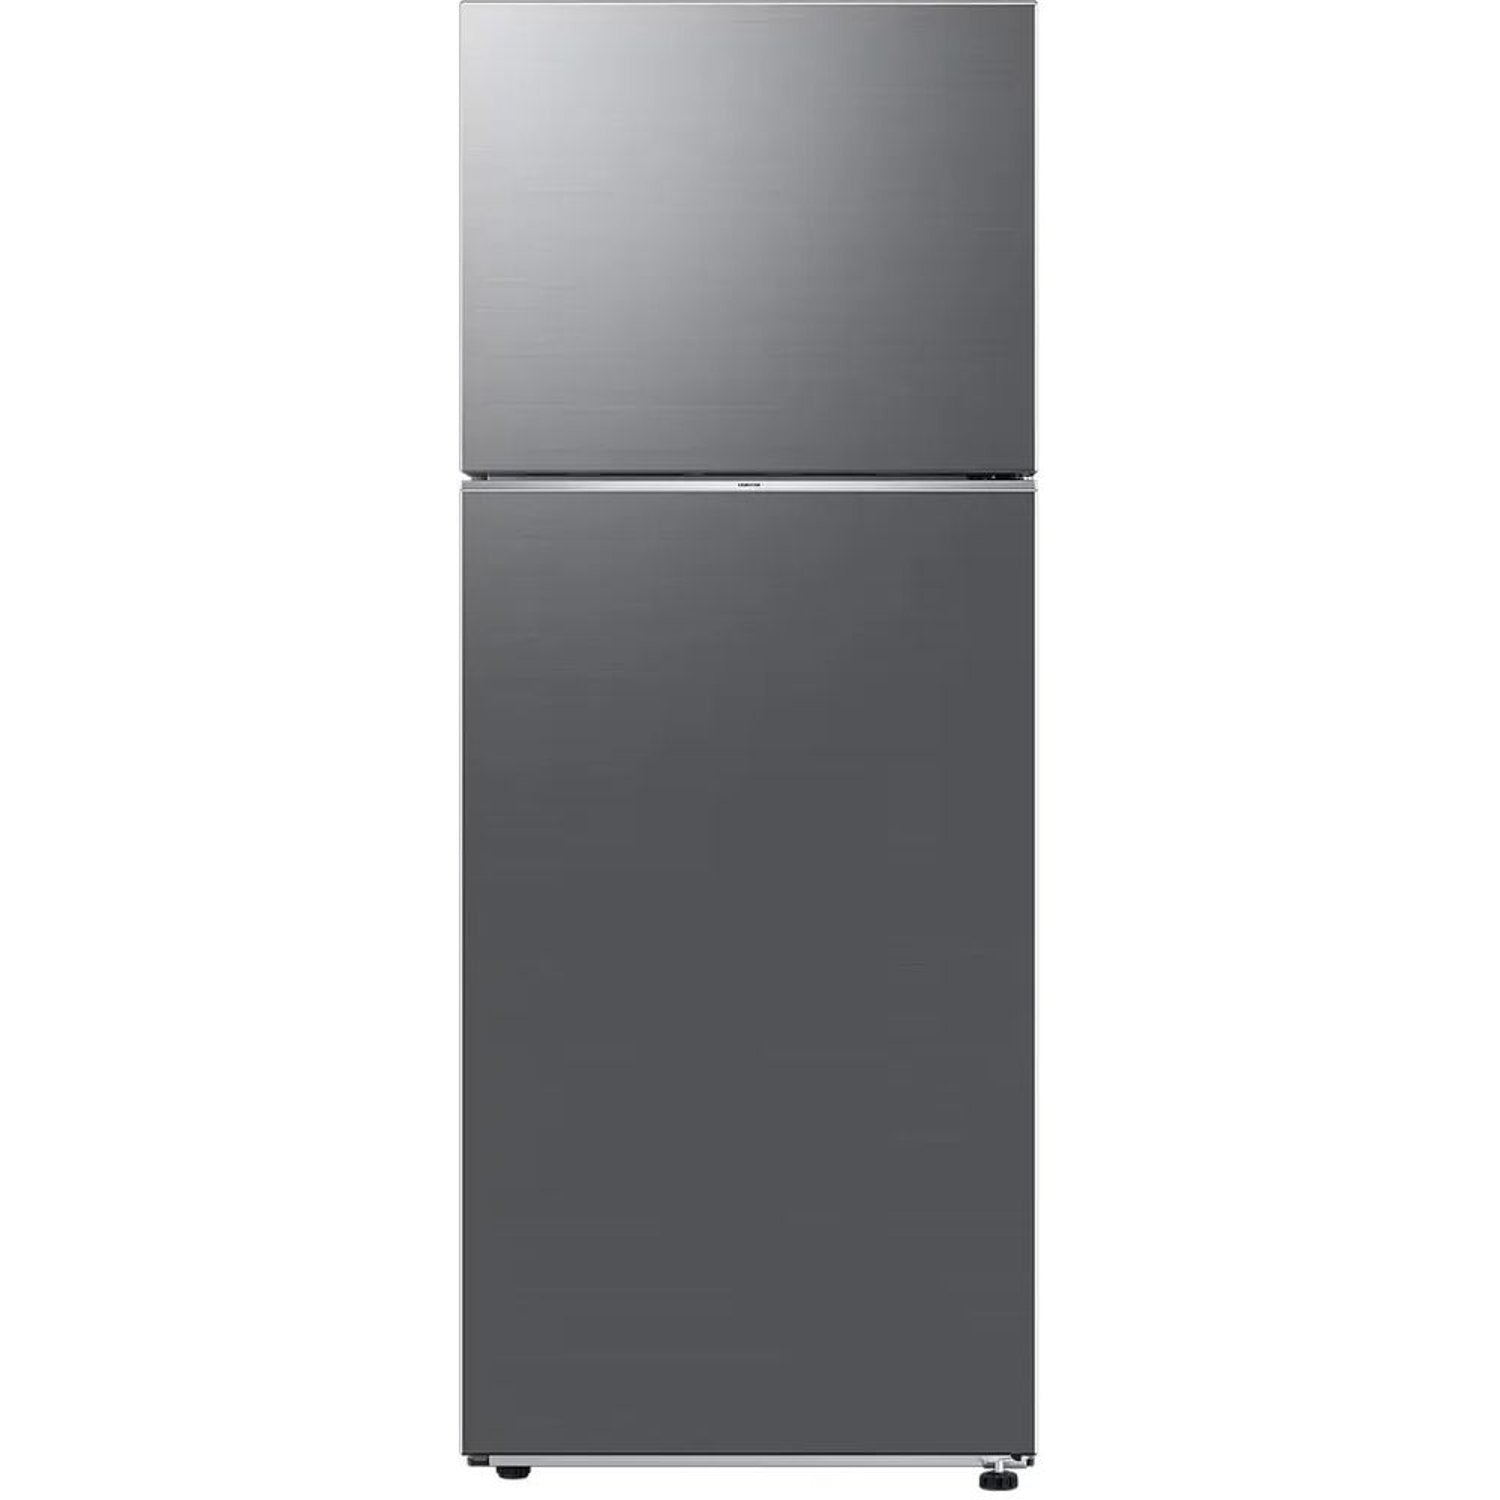 Samsung Top Mount Refrigerator 500 Liters Silver – RT50CG6400S9